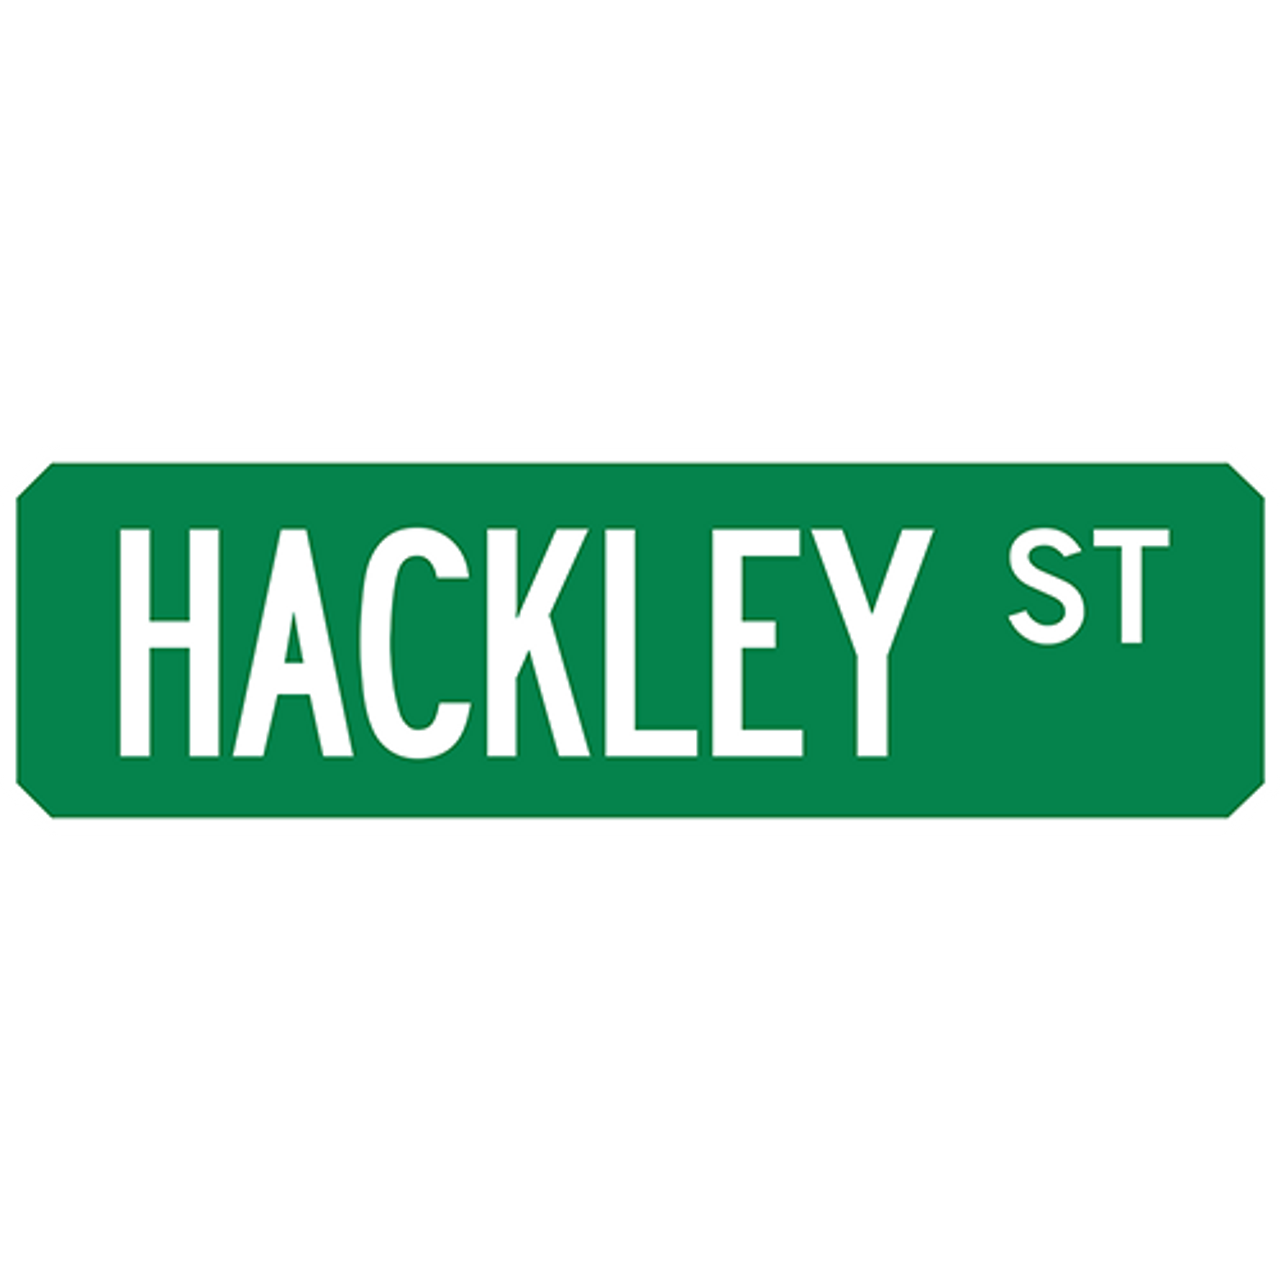 Hackley St Street Sign Muncie